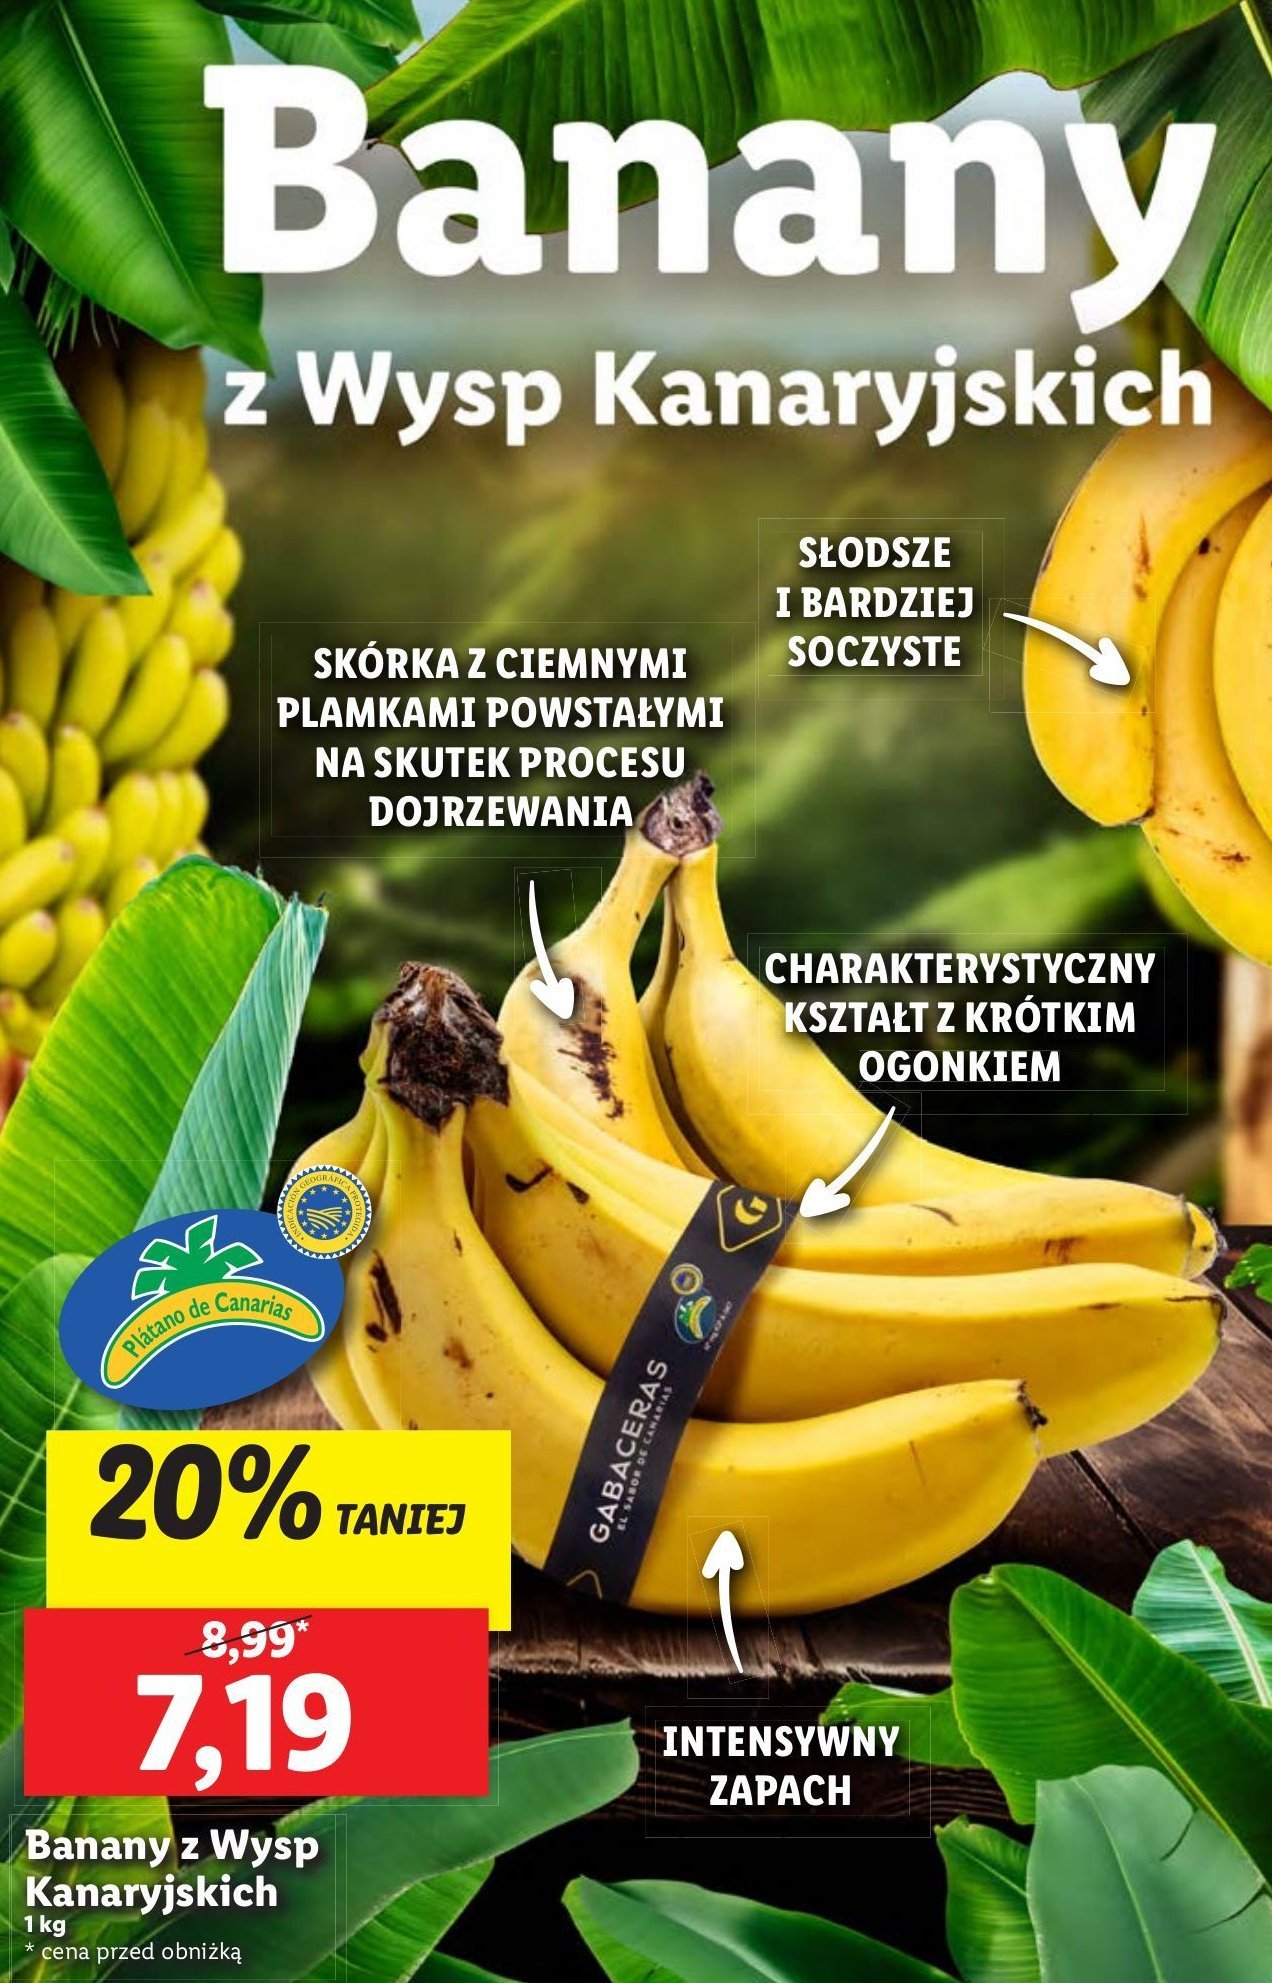 Banany z wysp kanaryjskich promocja